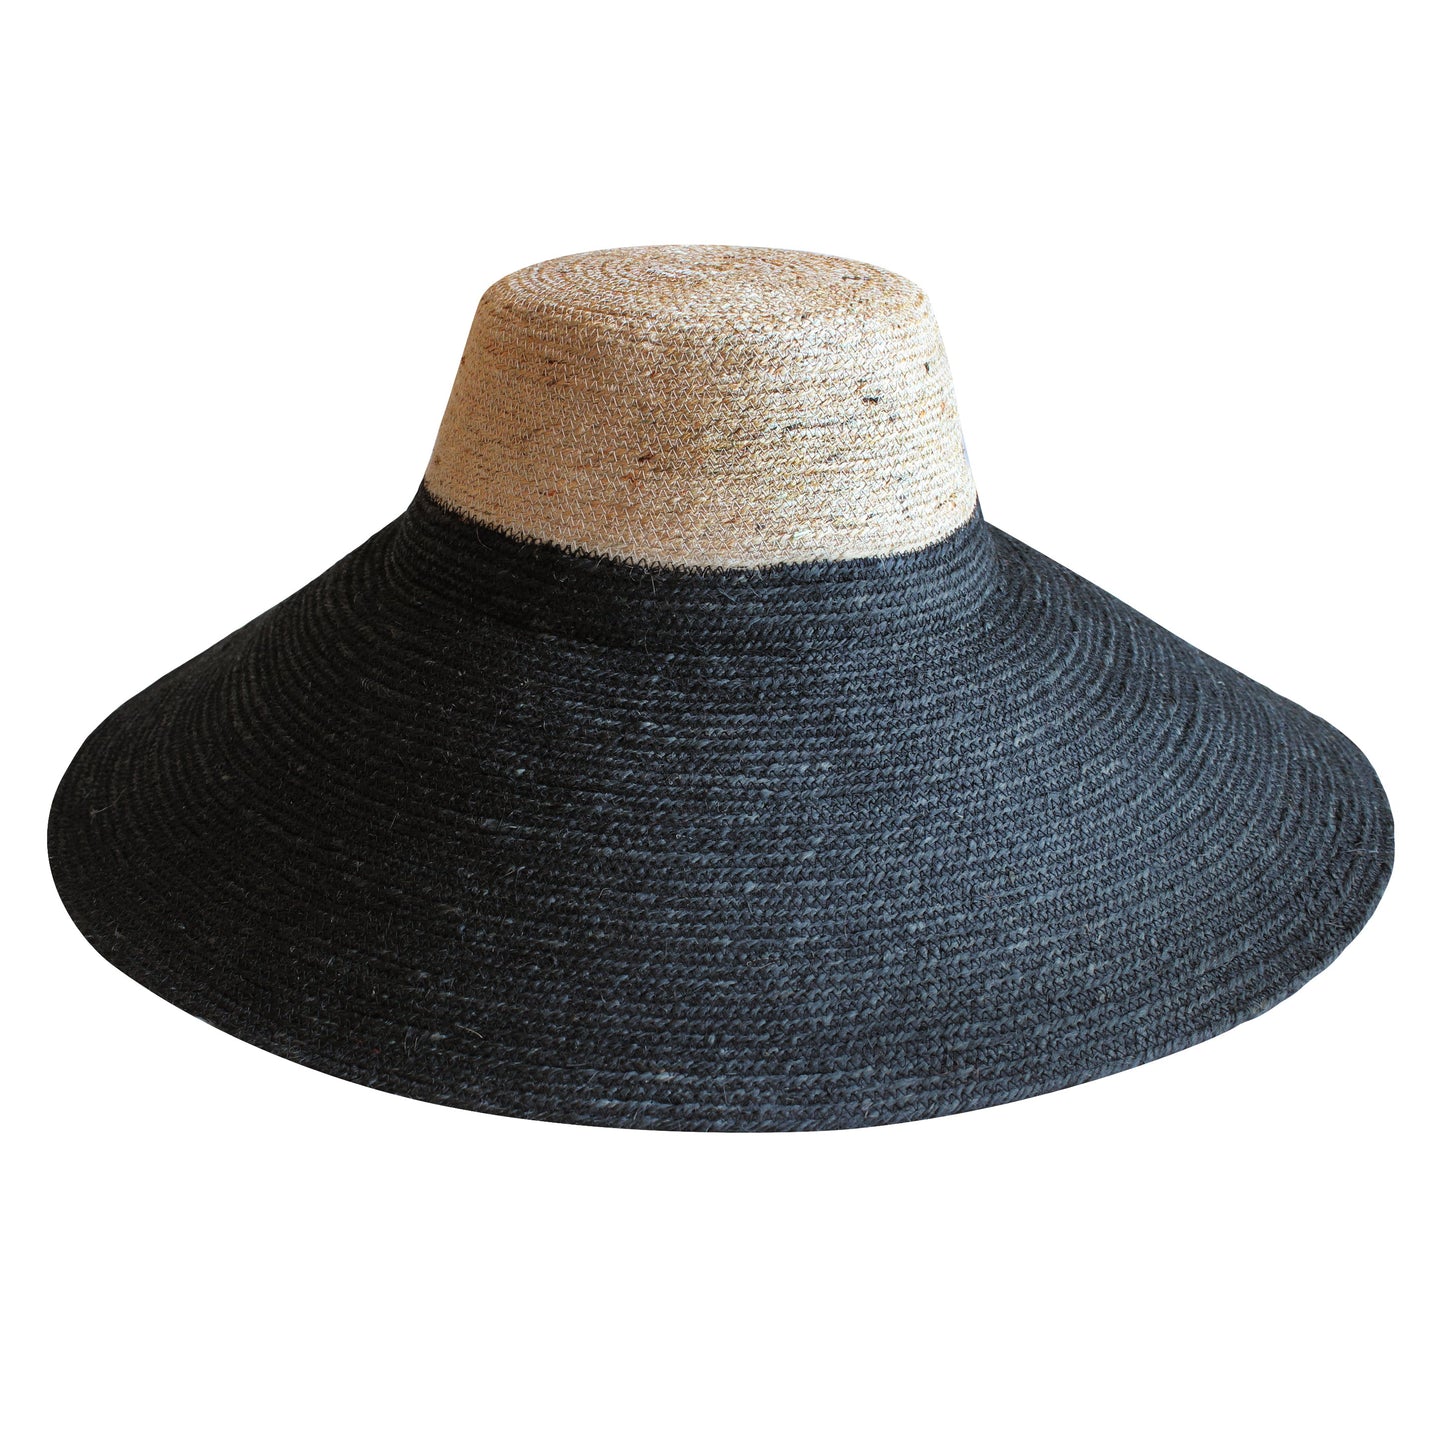 Jute Handwoven Straw Hat In Natural & Black